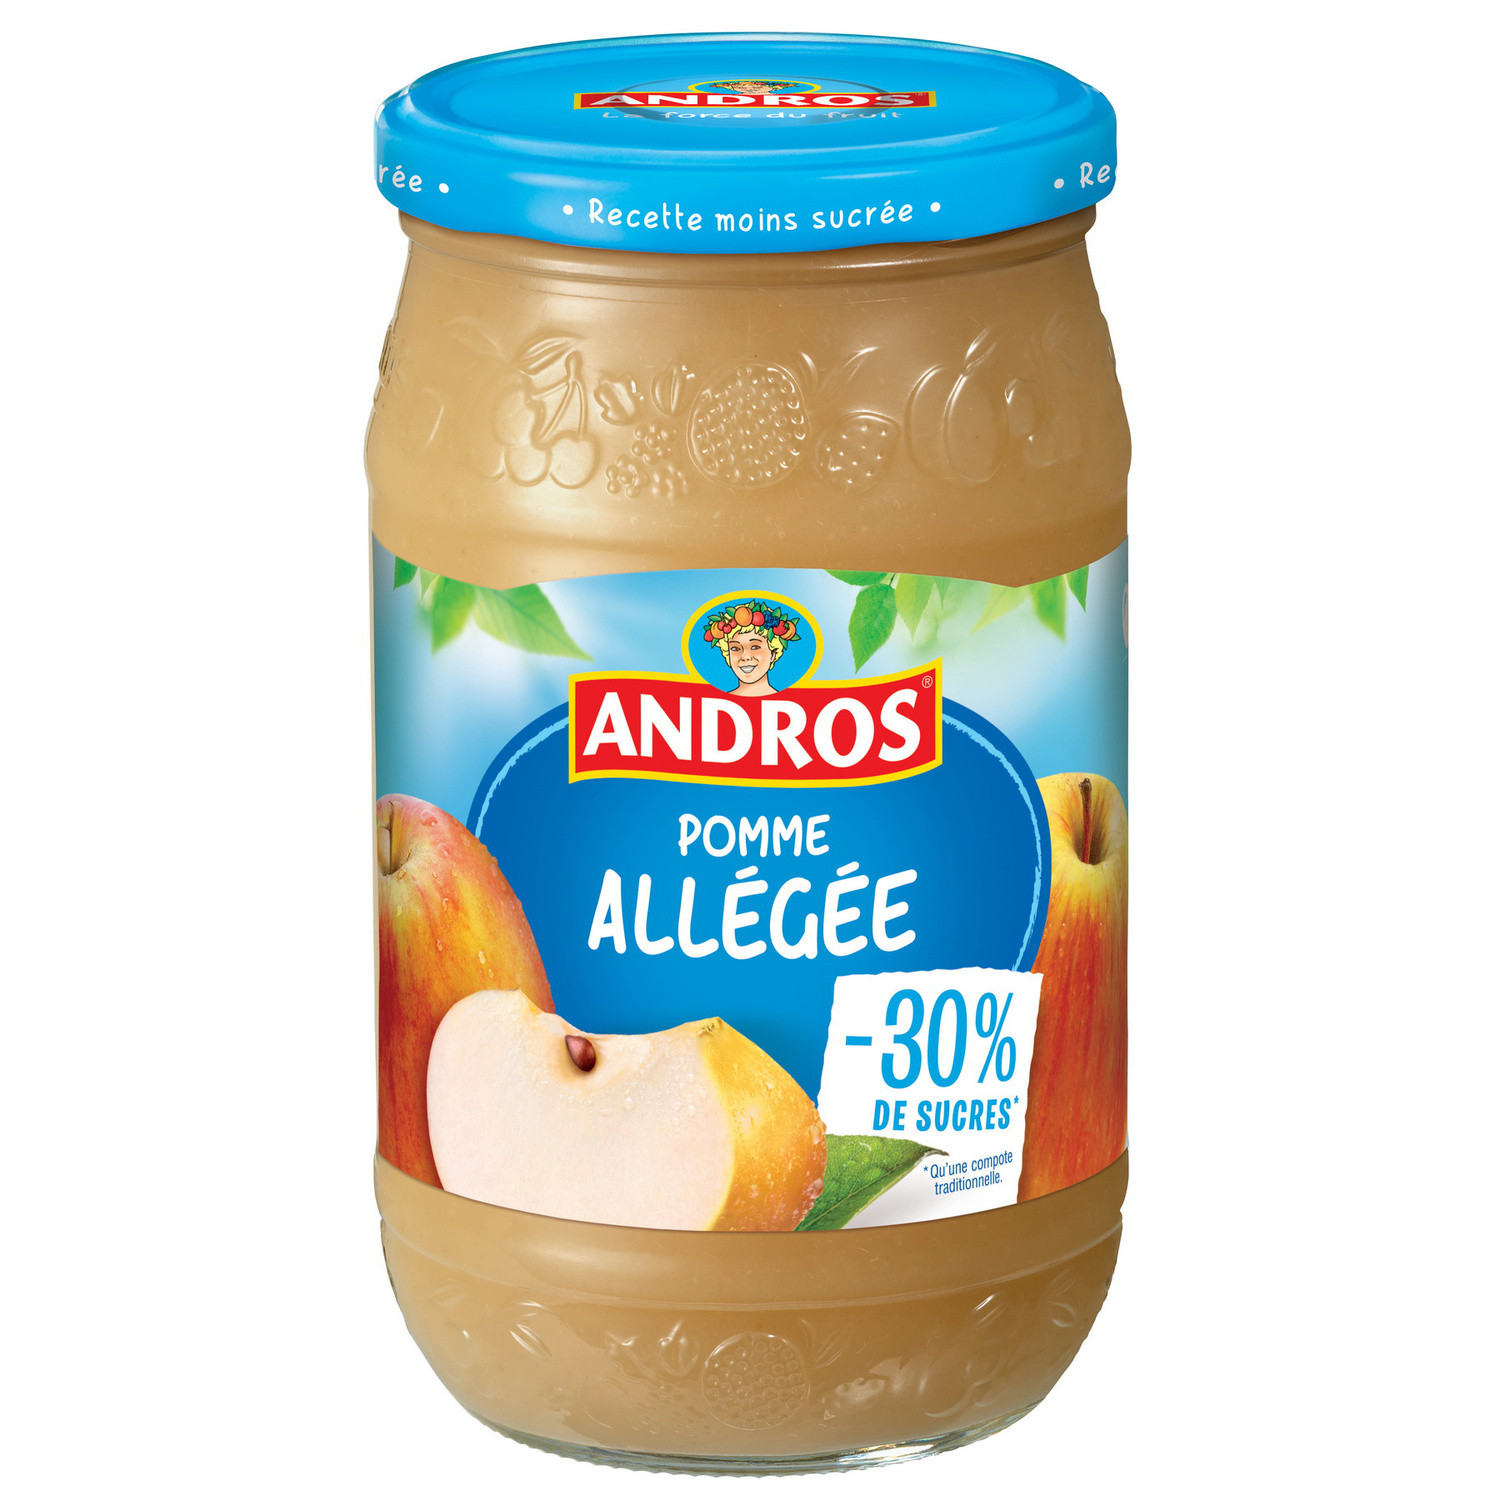 Andros Plain diet apple stewed 730g